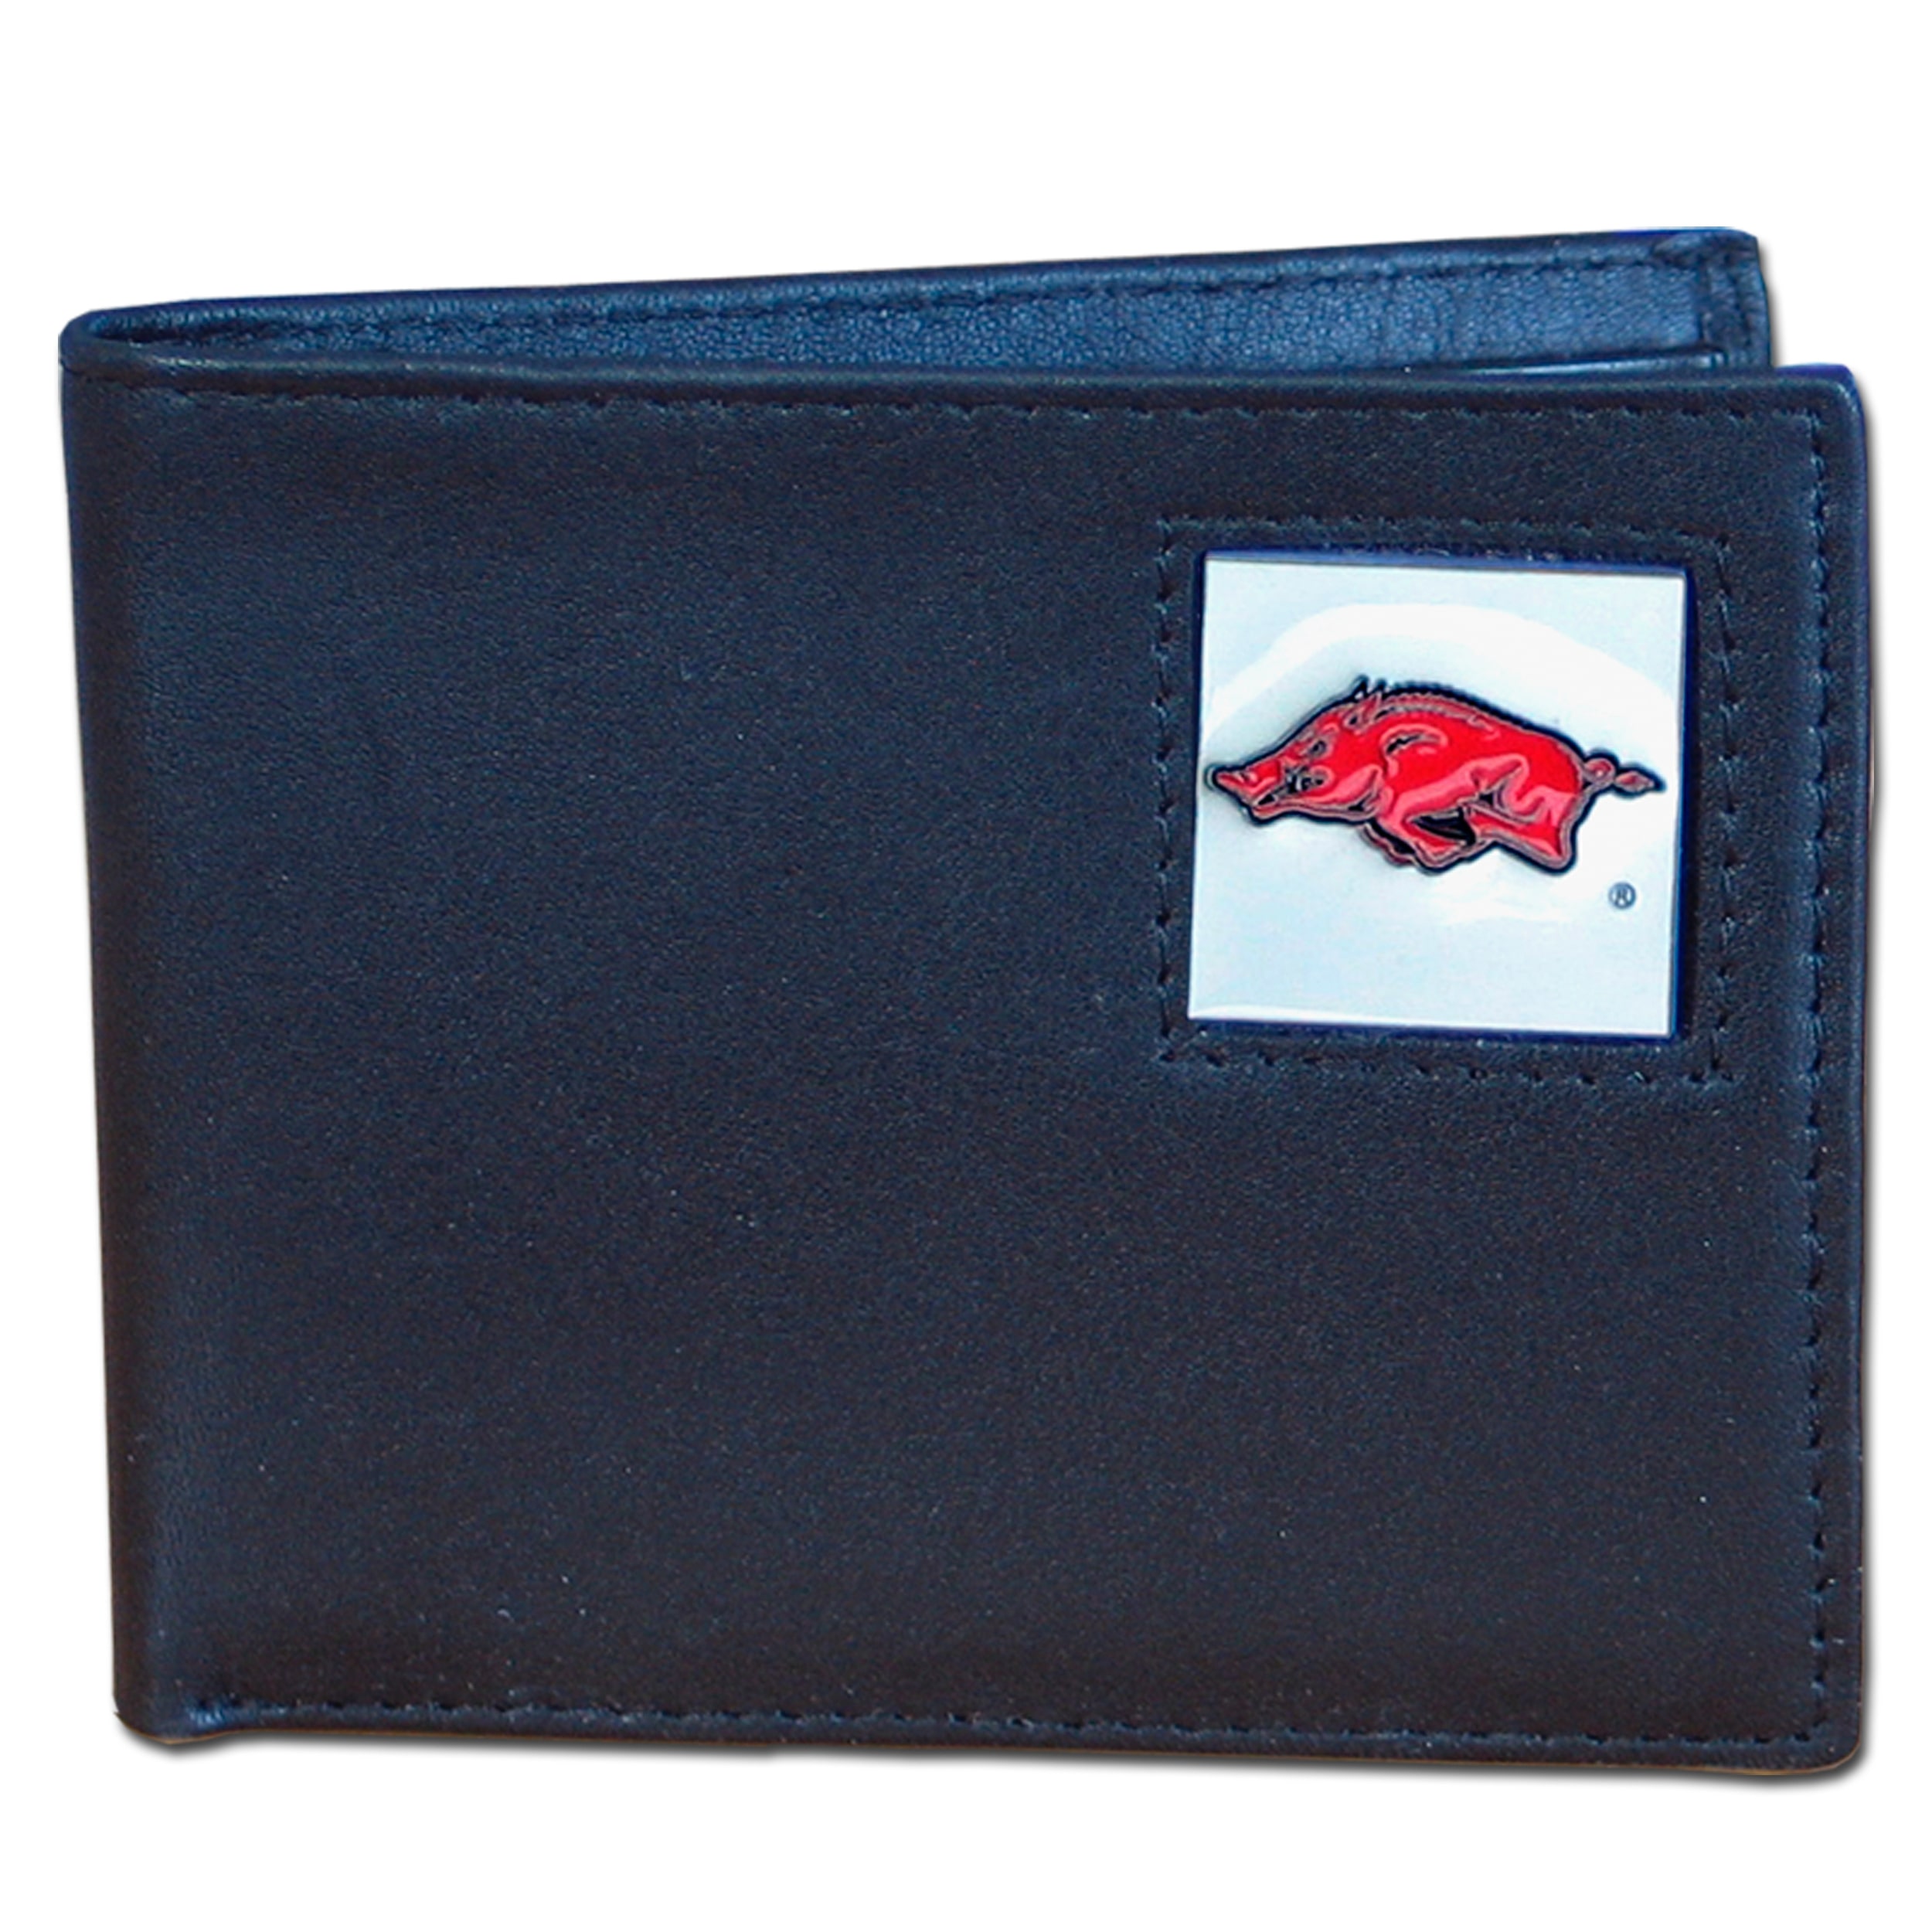 Arkansas Razorbacks Leather Bi-fold Wallet Packaged in Gift Box - image 2 of 2